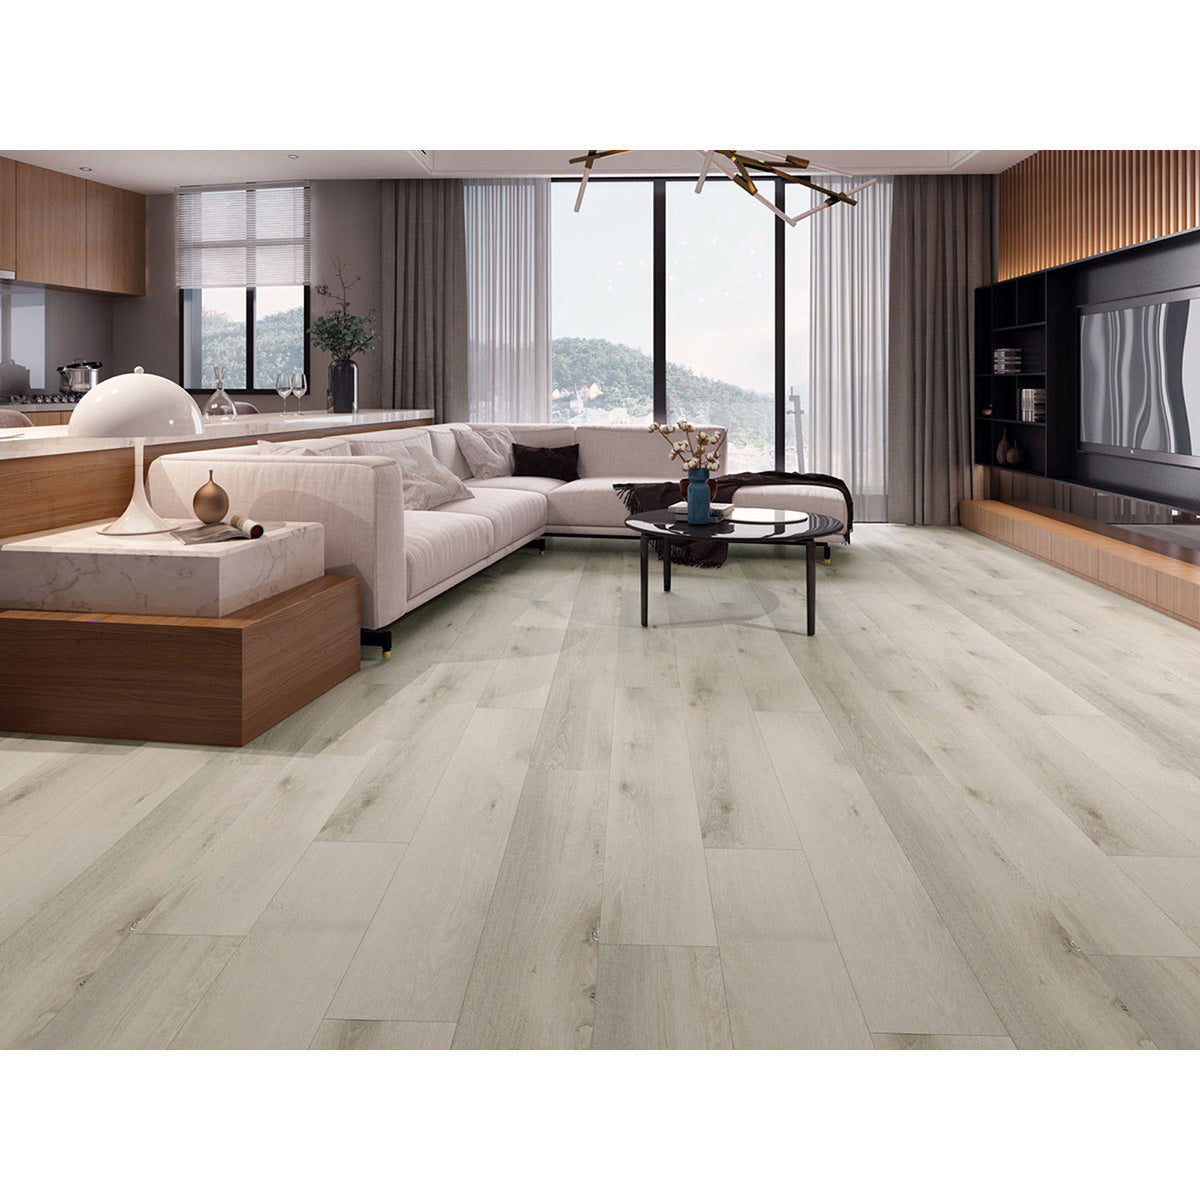 Buy Floors 2000 Simplistic LVP for a Great Value at Georgia Carpet